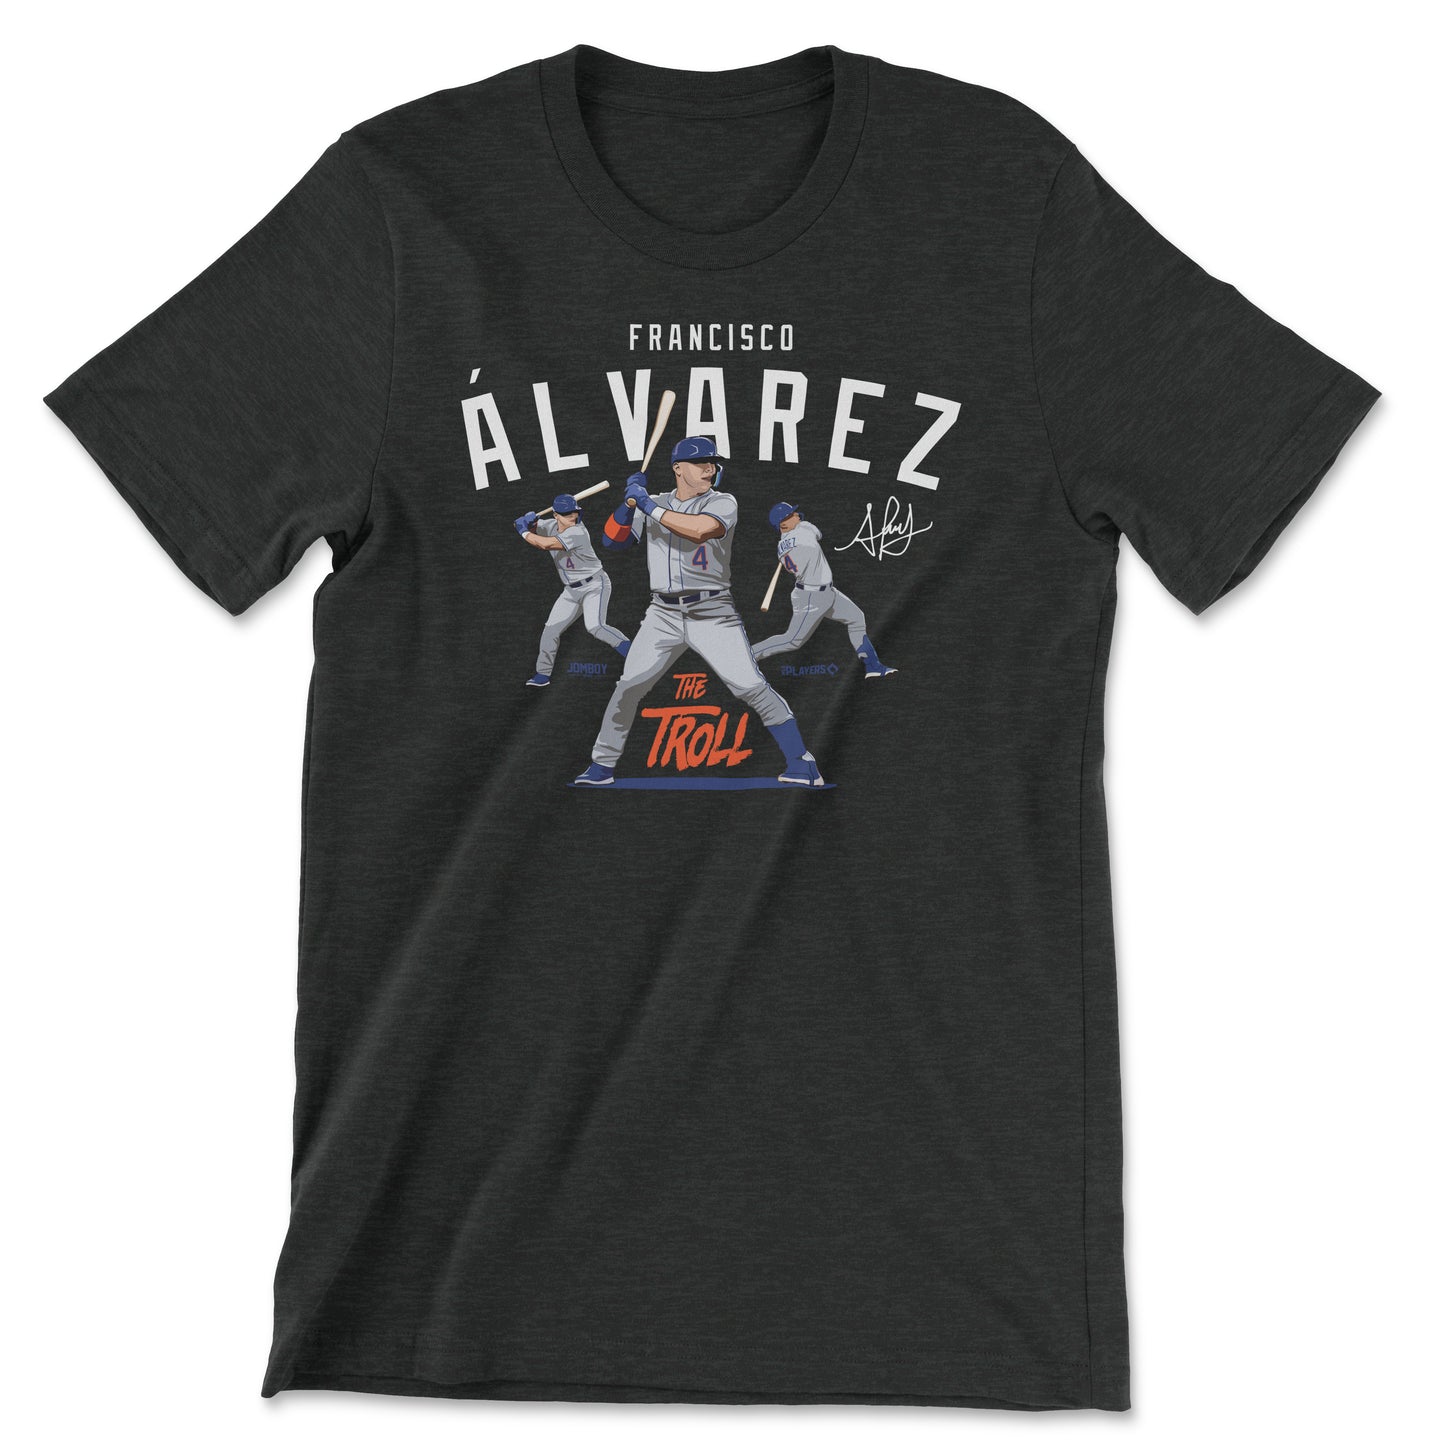 Francisco "The Troll" Alvarez Signature Series | T-Shirt